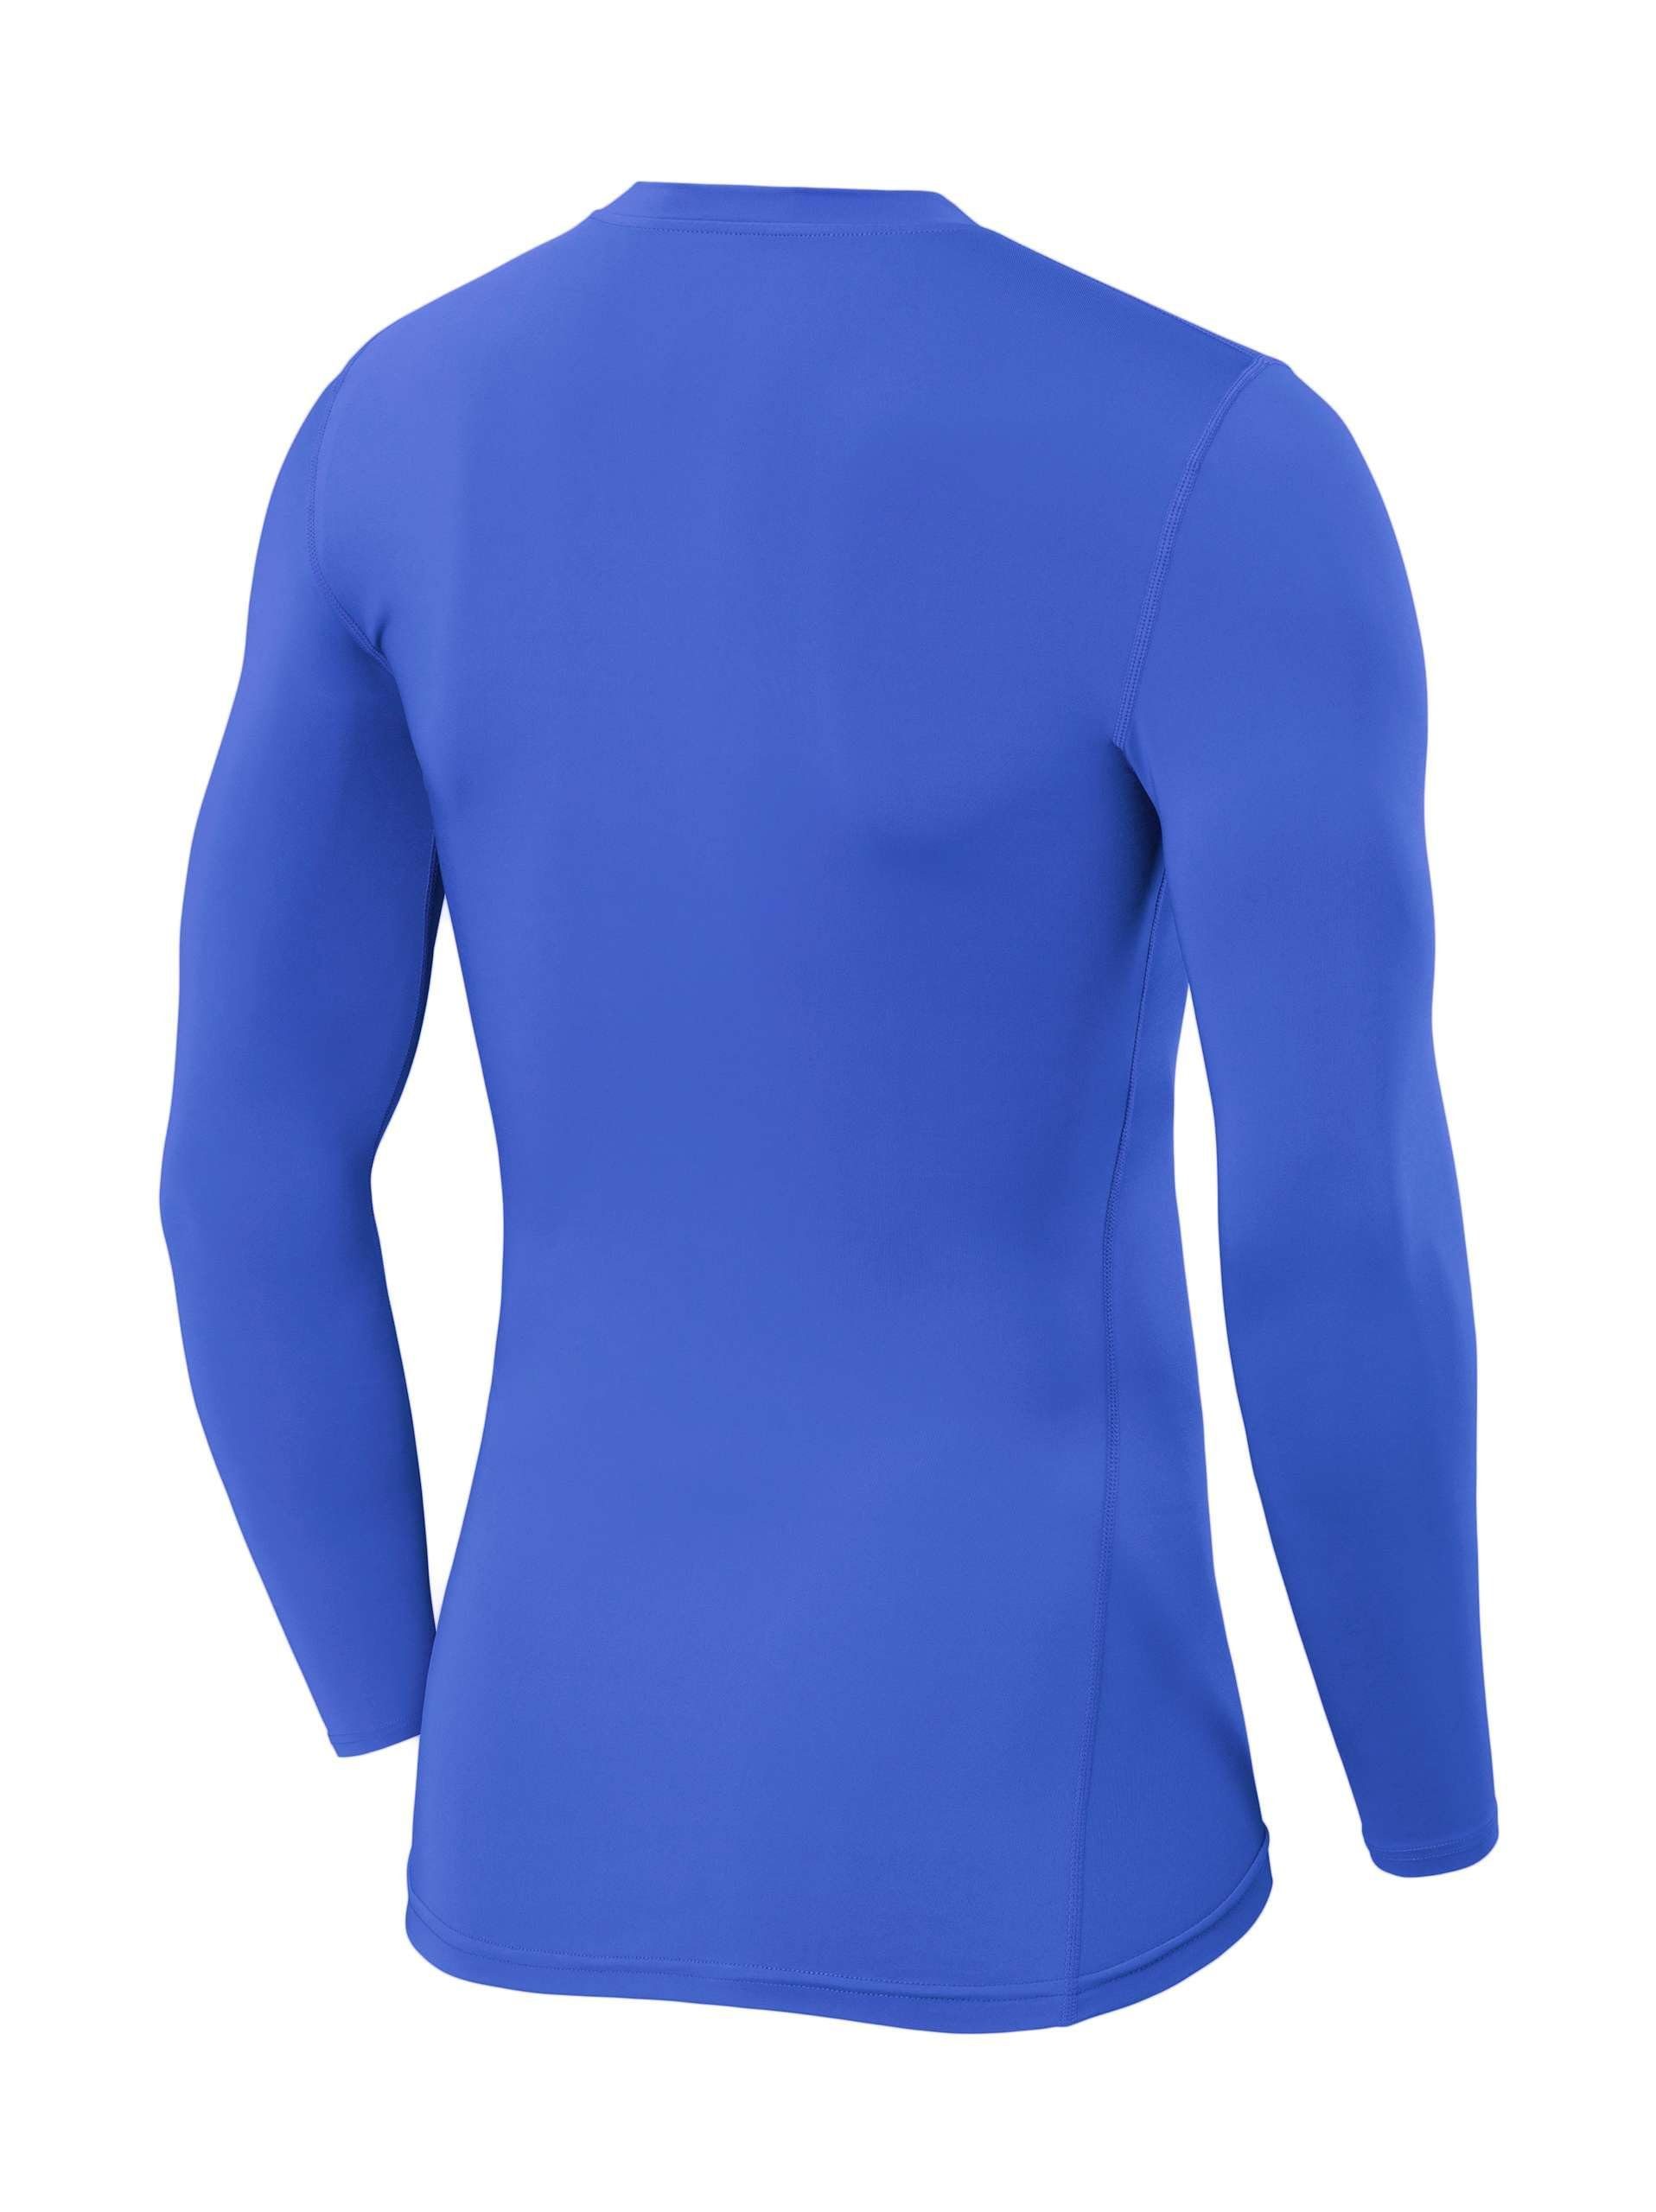 Rundhalsausschnitt Langarmshirt Shirt POWERLAYER PowerLayer Blau Herren XS Kompressions